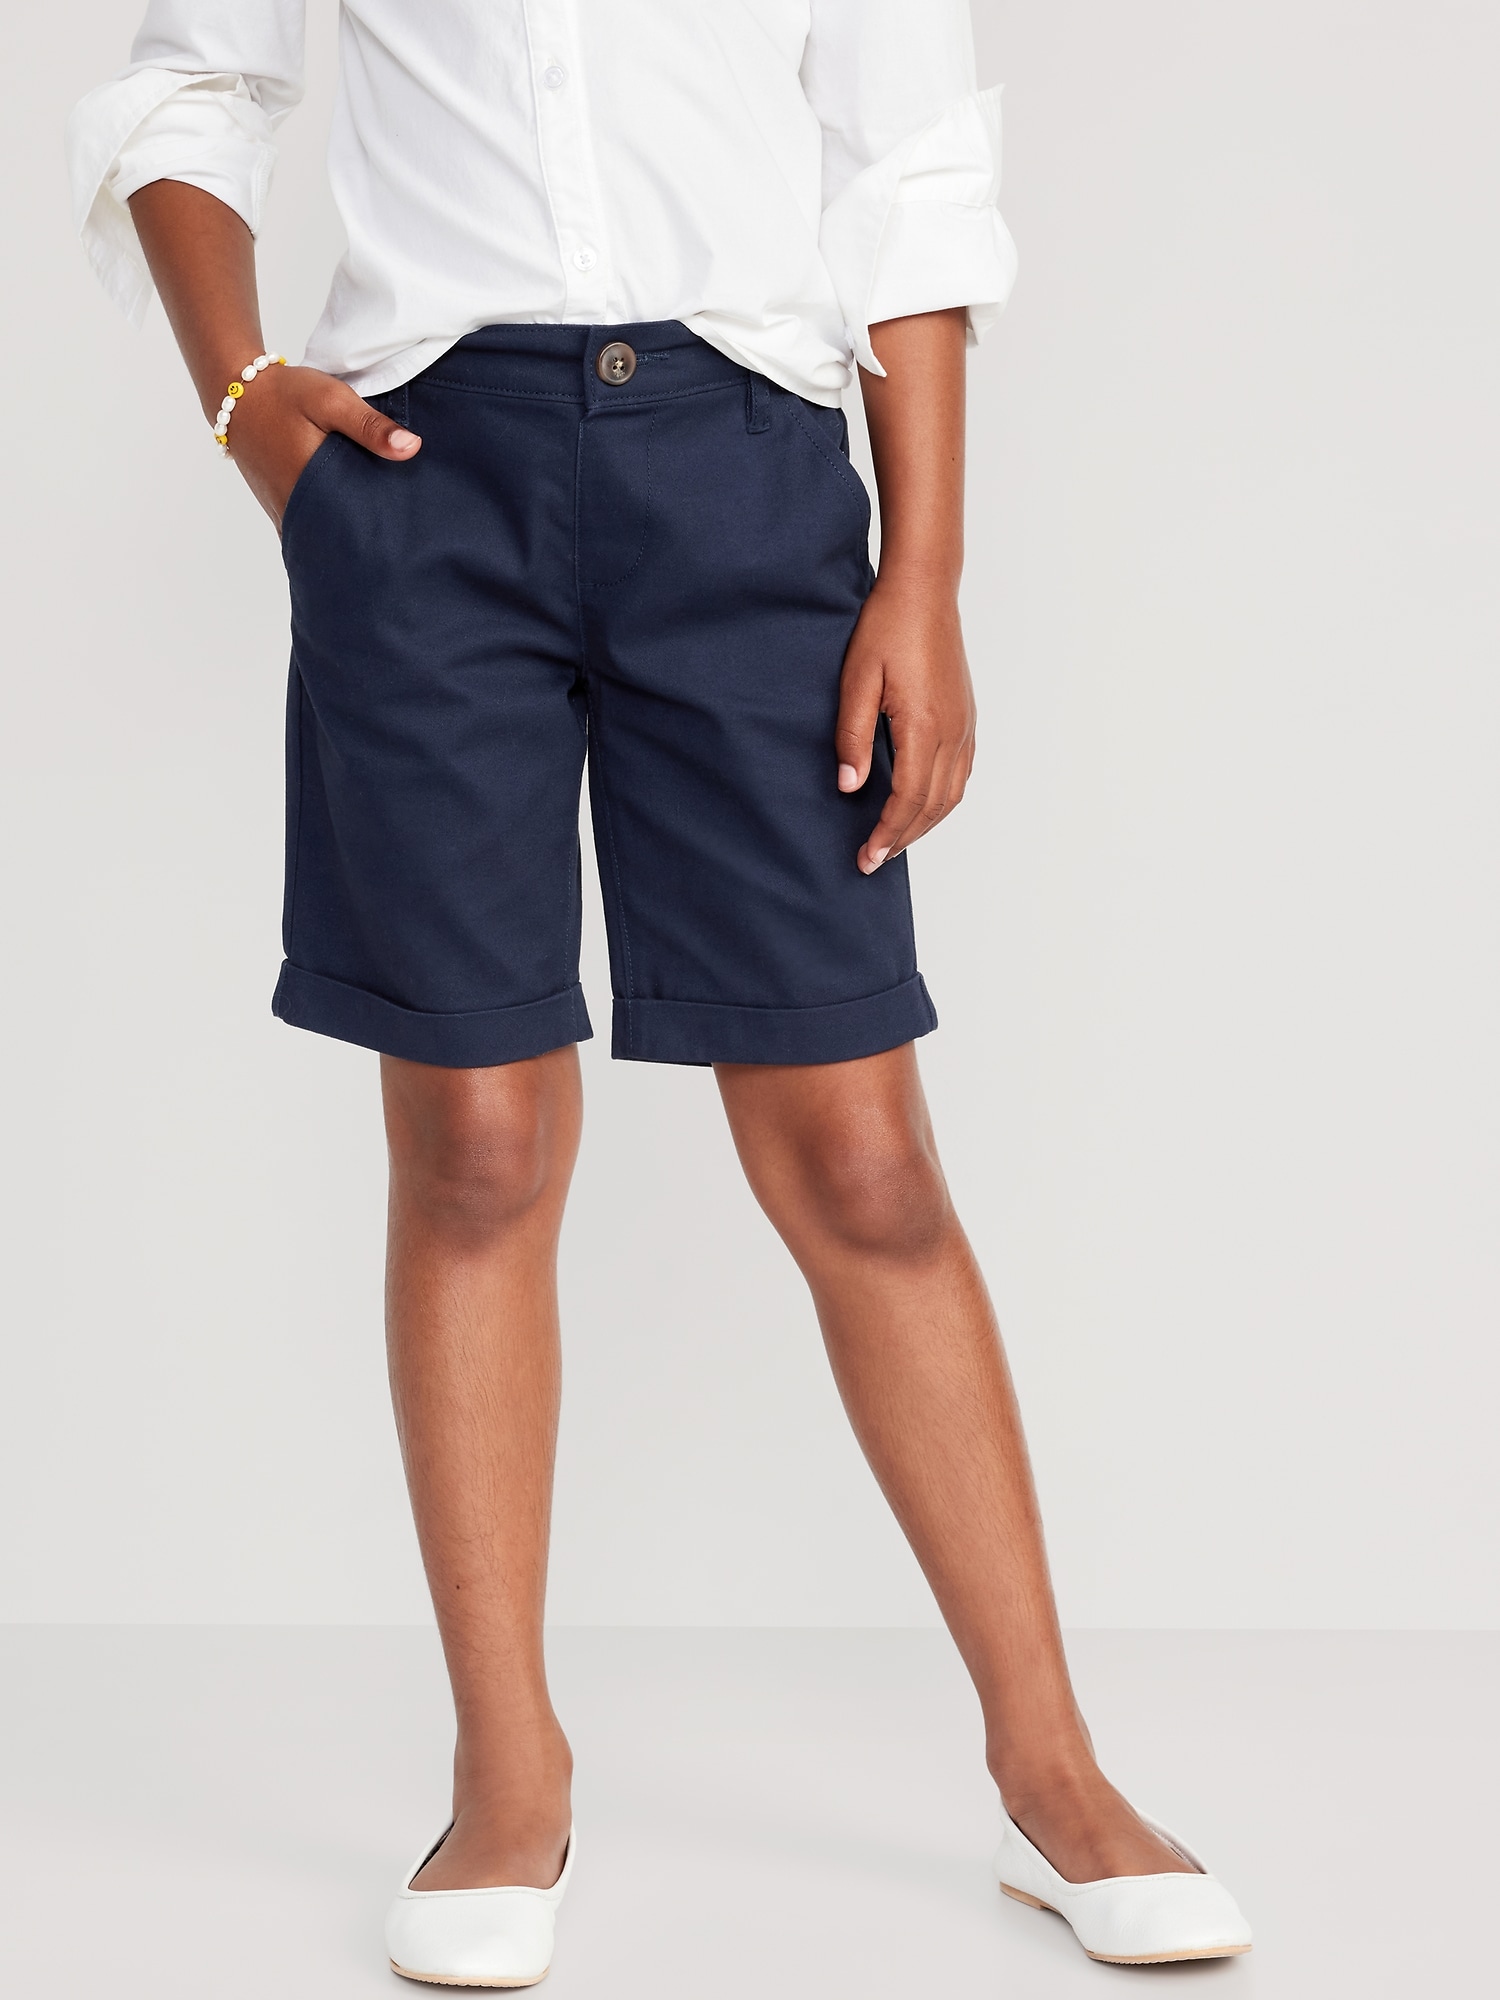 Shorts Navy | Old